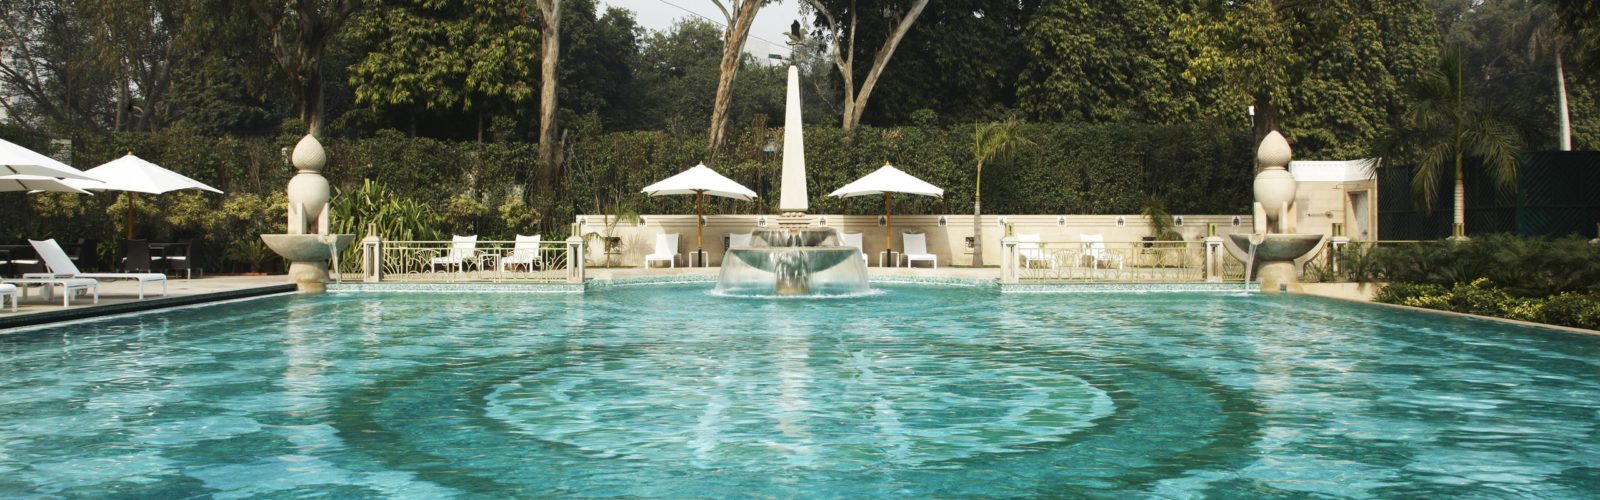 swimming-pool-the-imperial-delhi-india